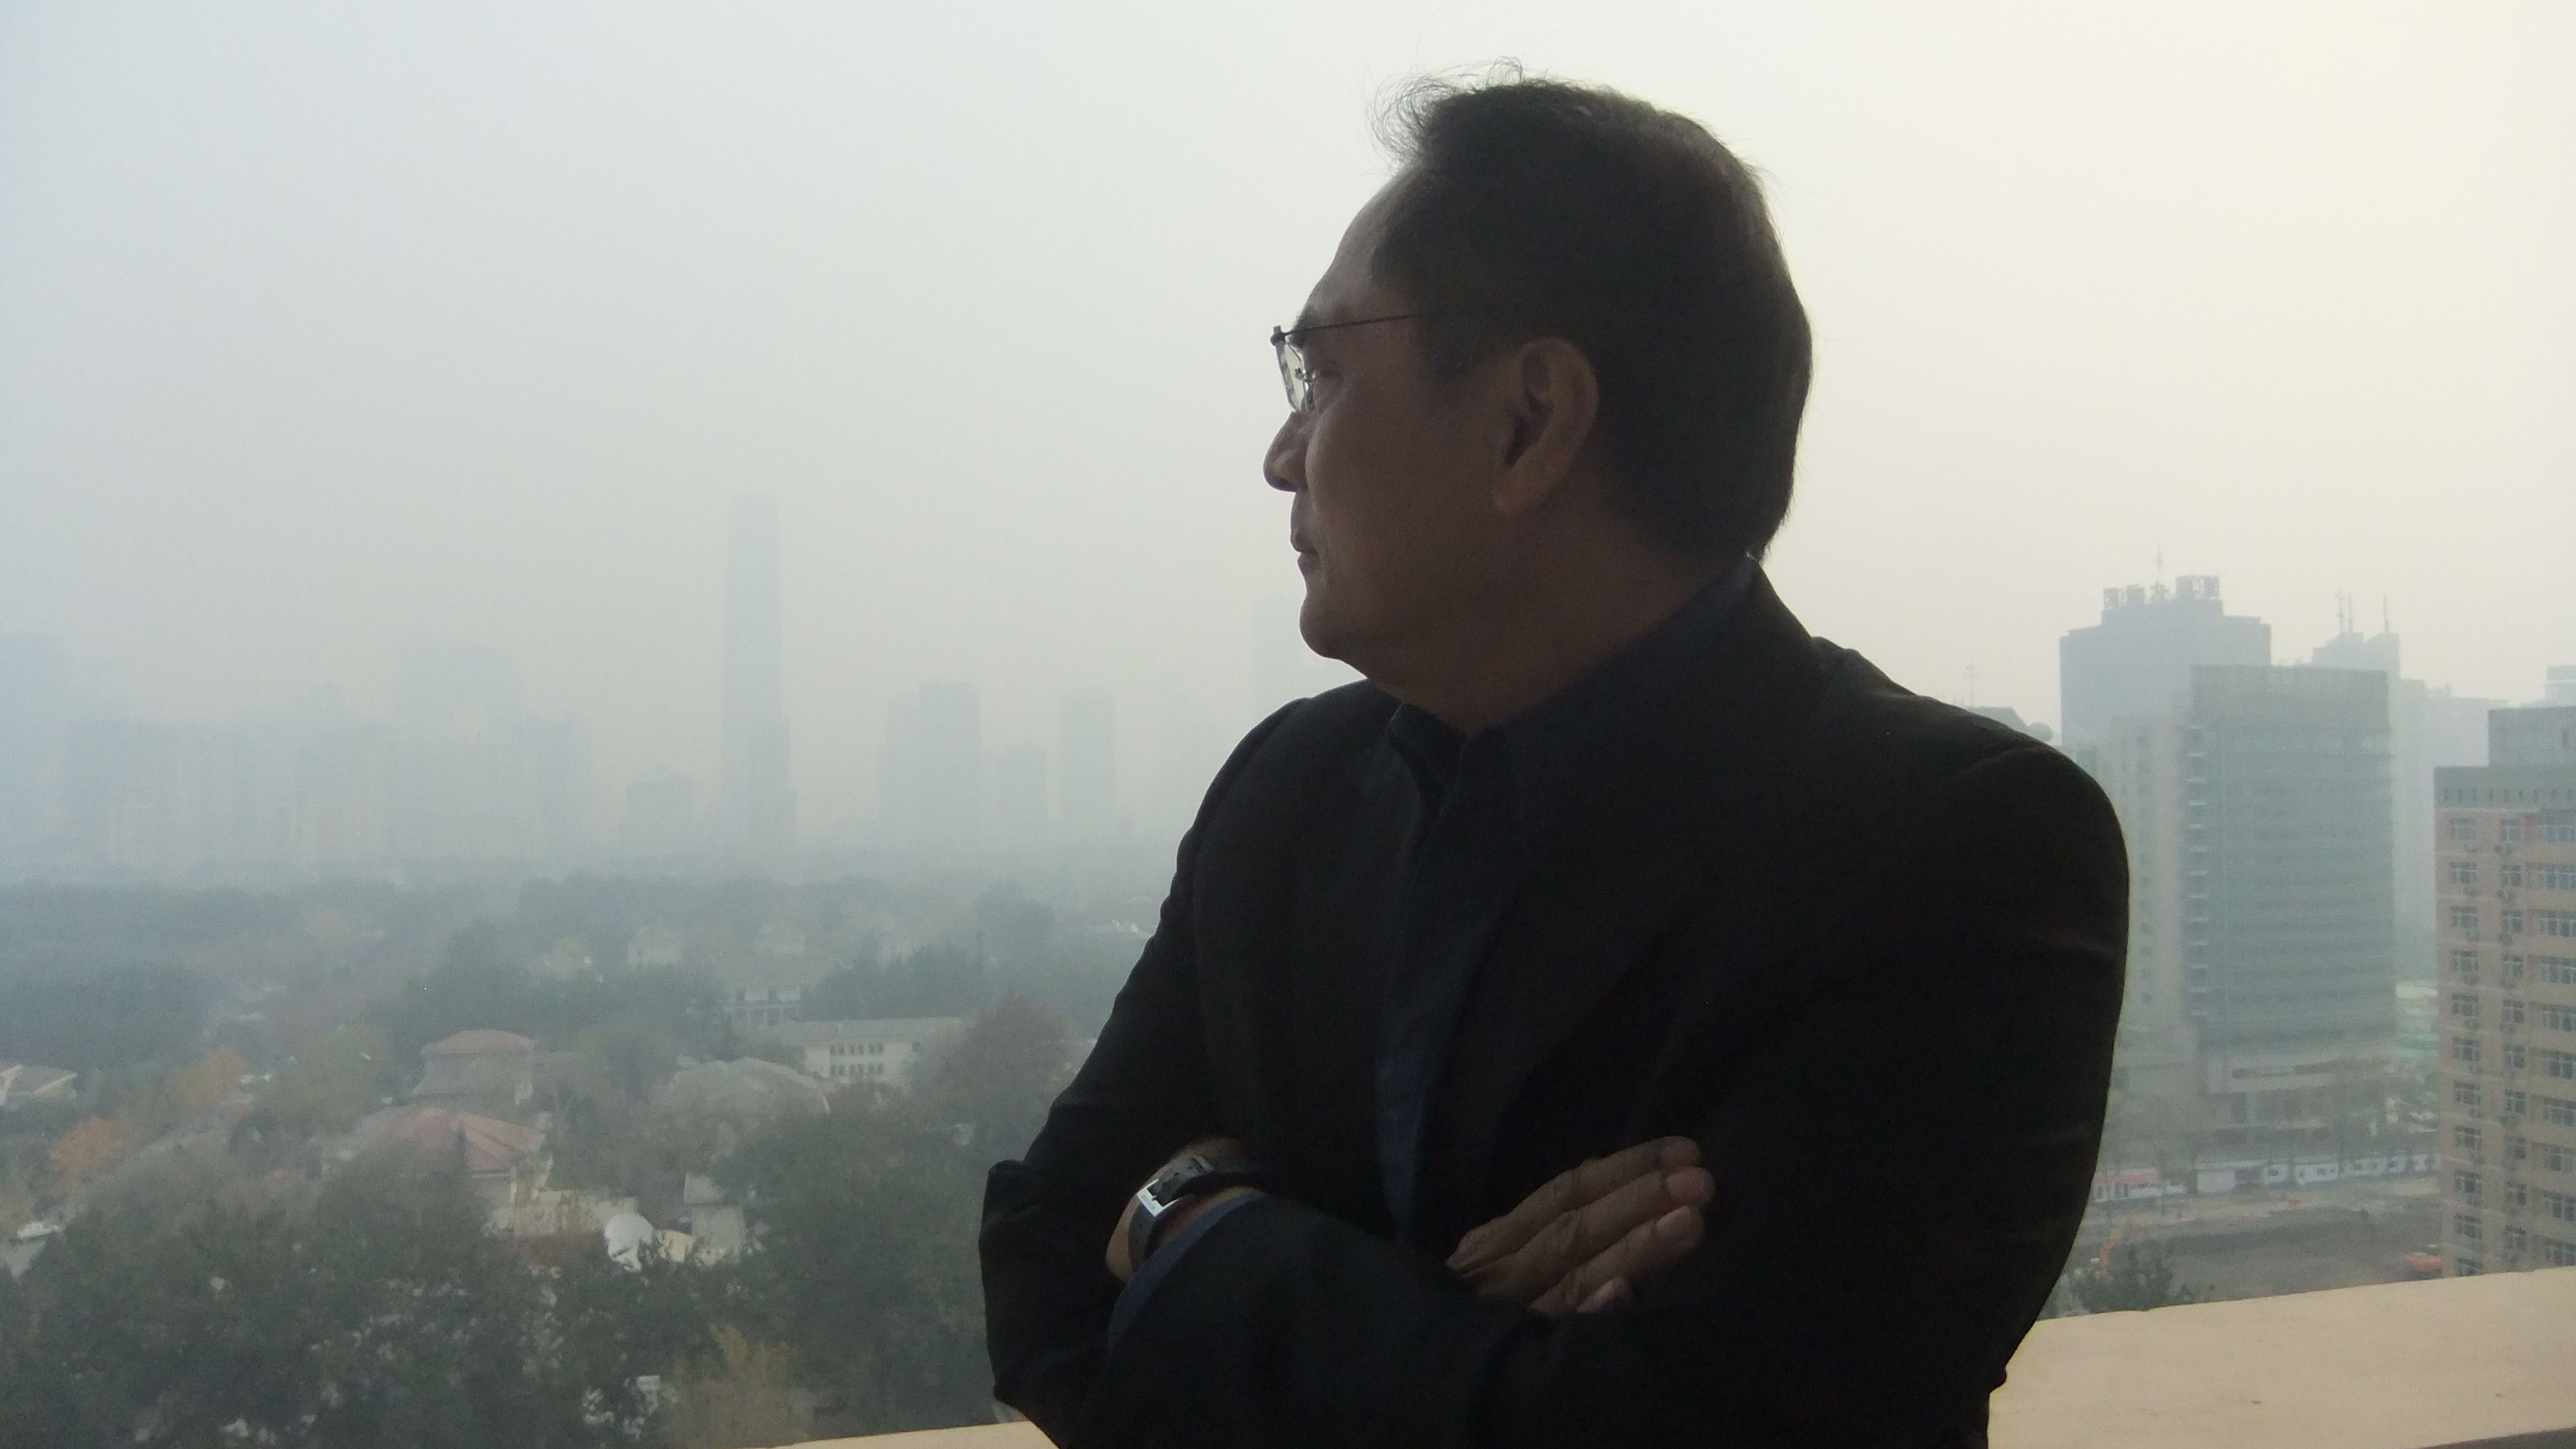 CNN's Beijing Bureau Chief Jaime FlorCruz looks out on Beijing's pollution on November 16.